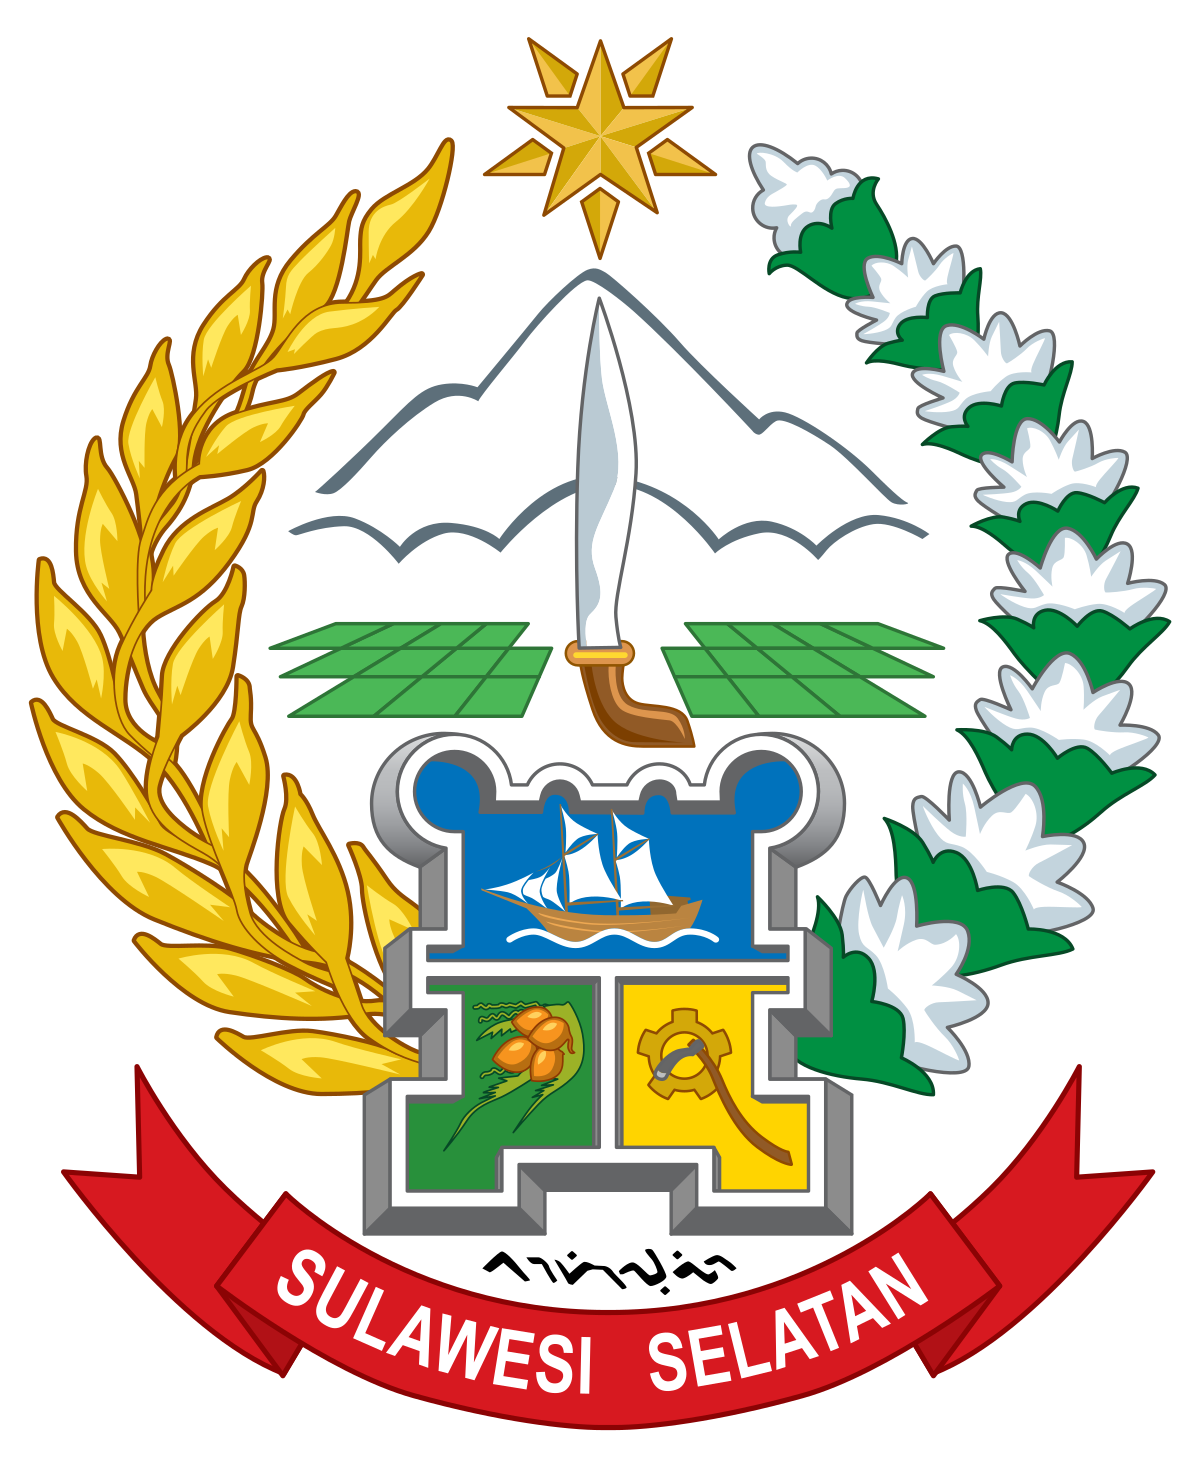 Lambang Sulawesi Selatan Wikipedia Bahasa Indonesia Ensiklopedia Bebas